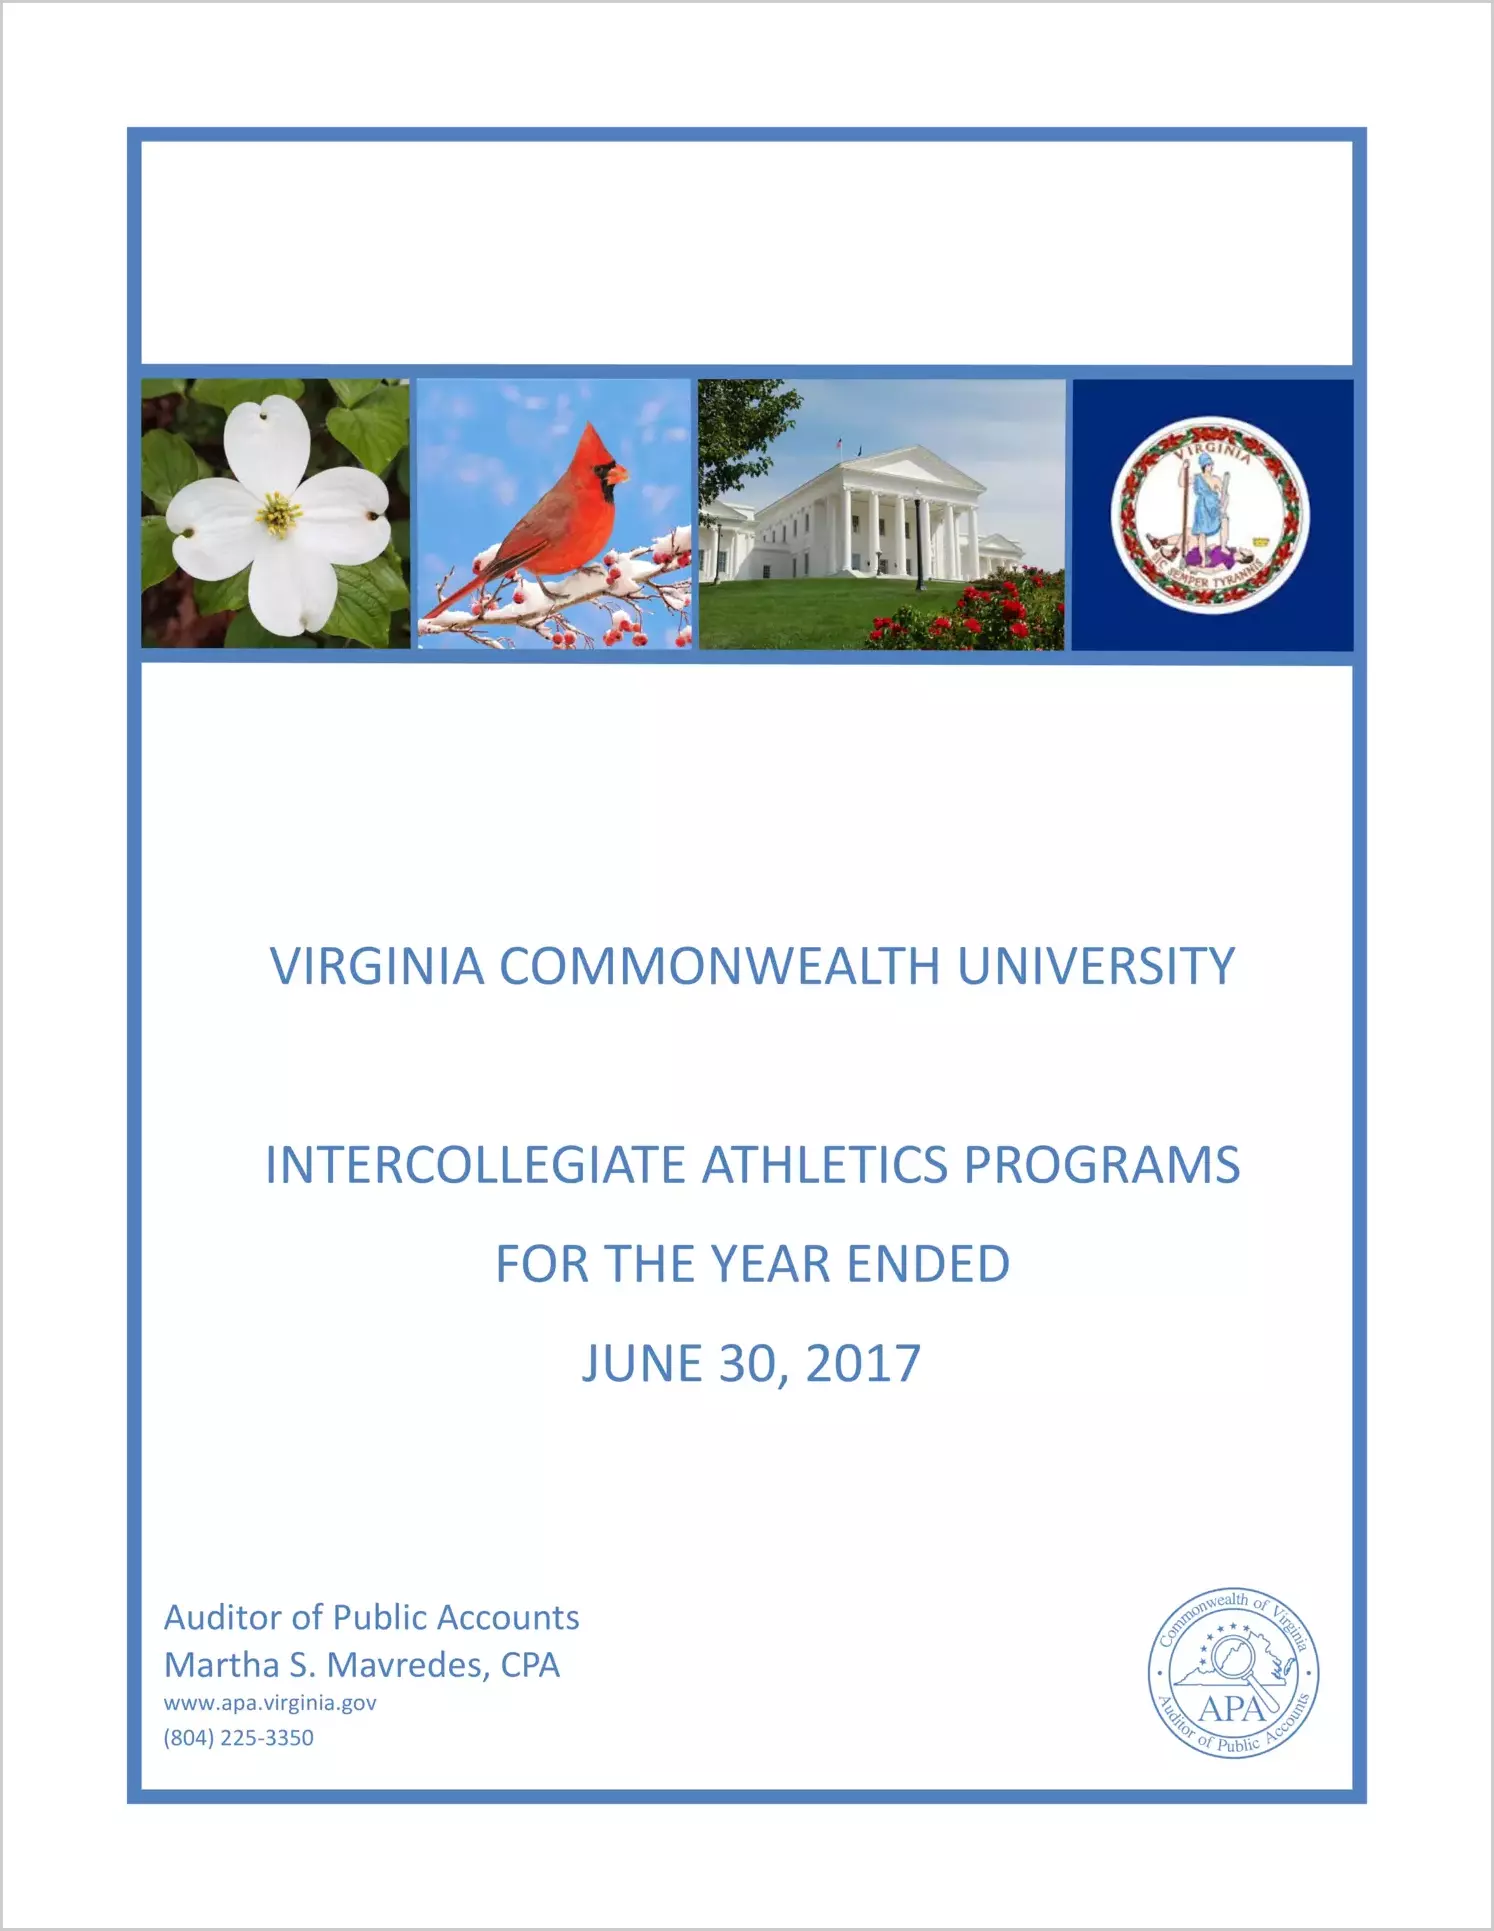 Virginia Commonwealth University Intercollegiate Athletics Programs for the year ended June 30, 2017